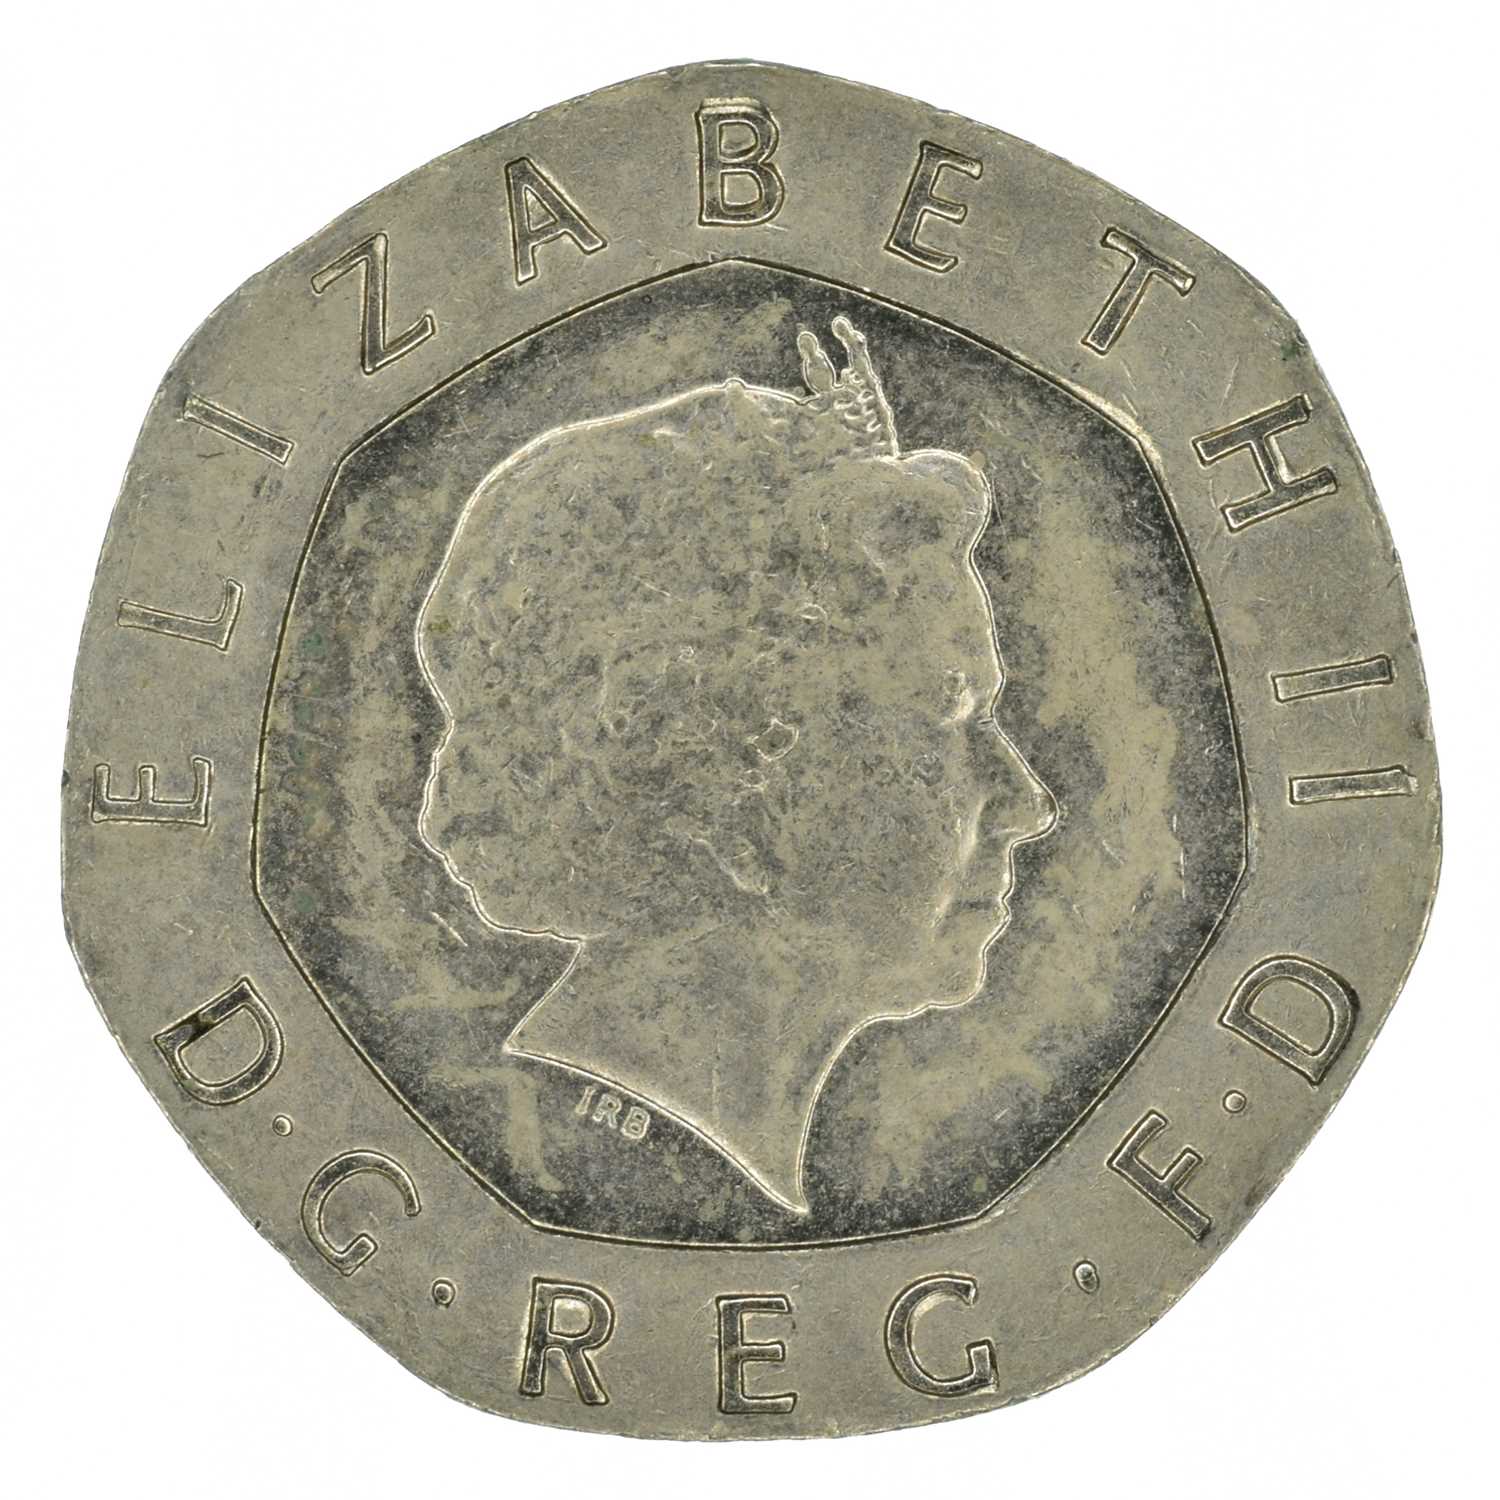 Lot 91 - Elizabeth II 20p piece, 2008 undated error coin.